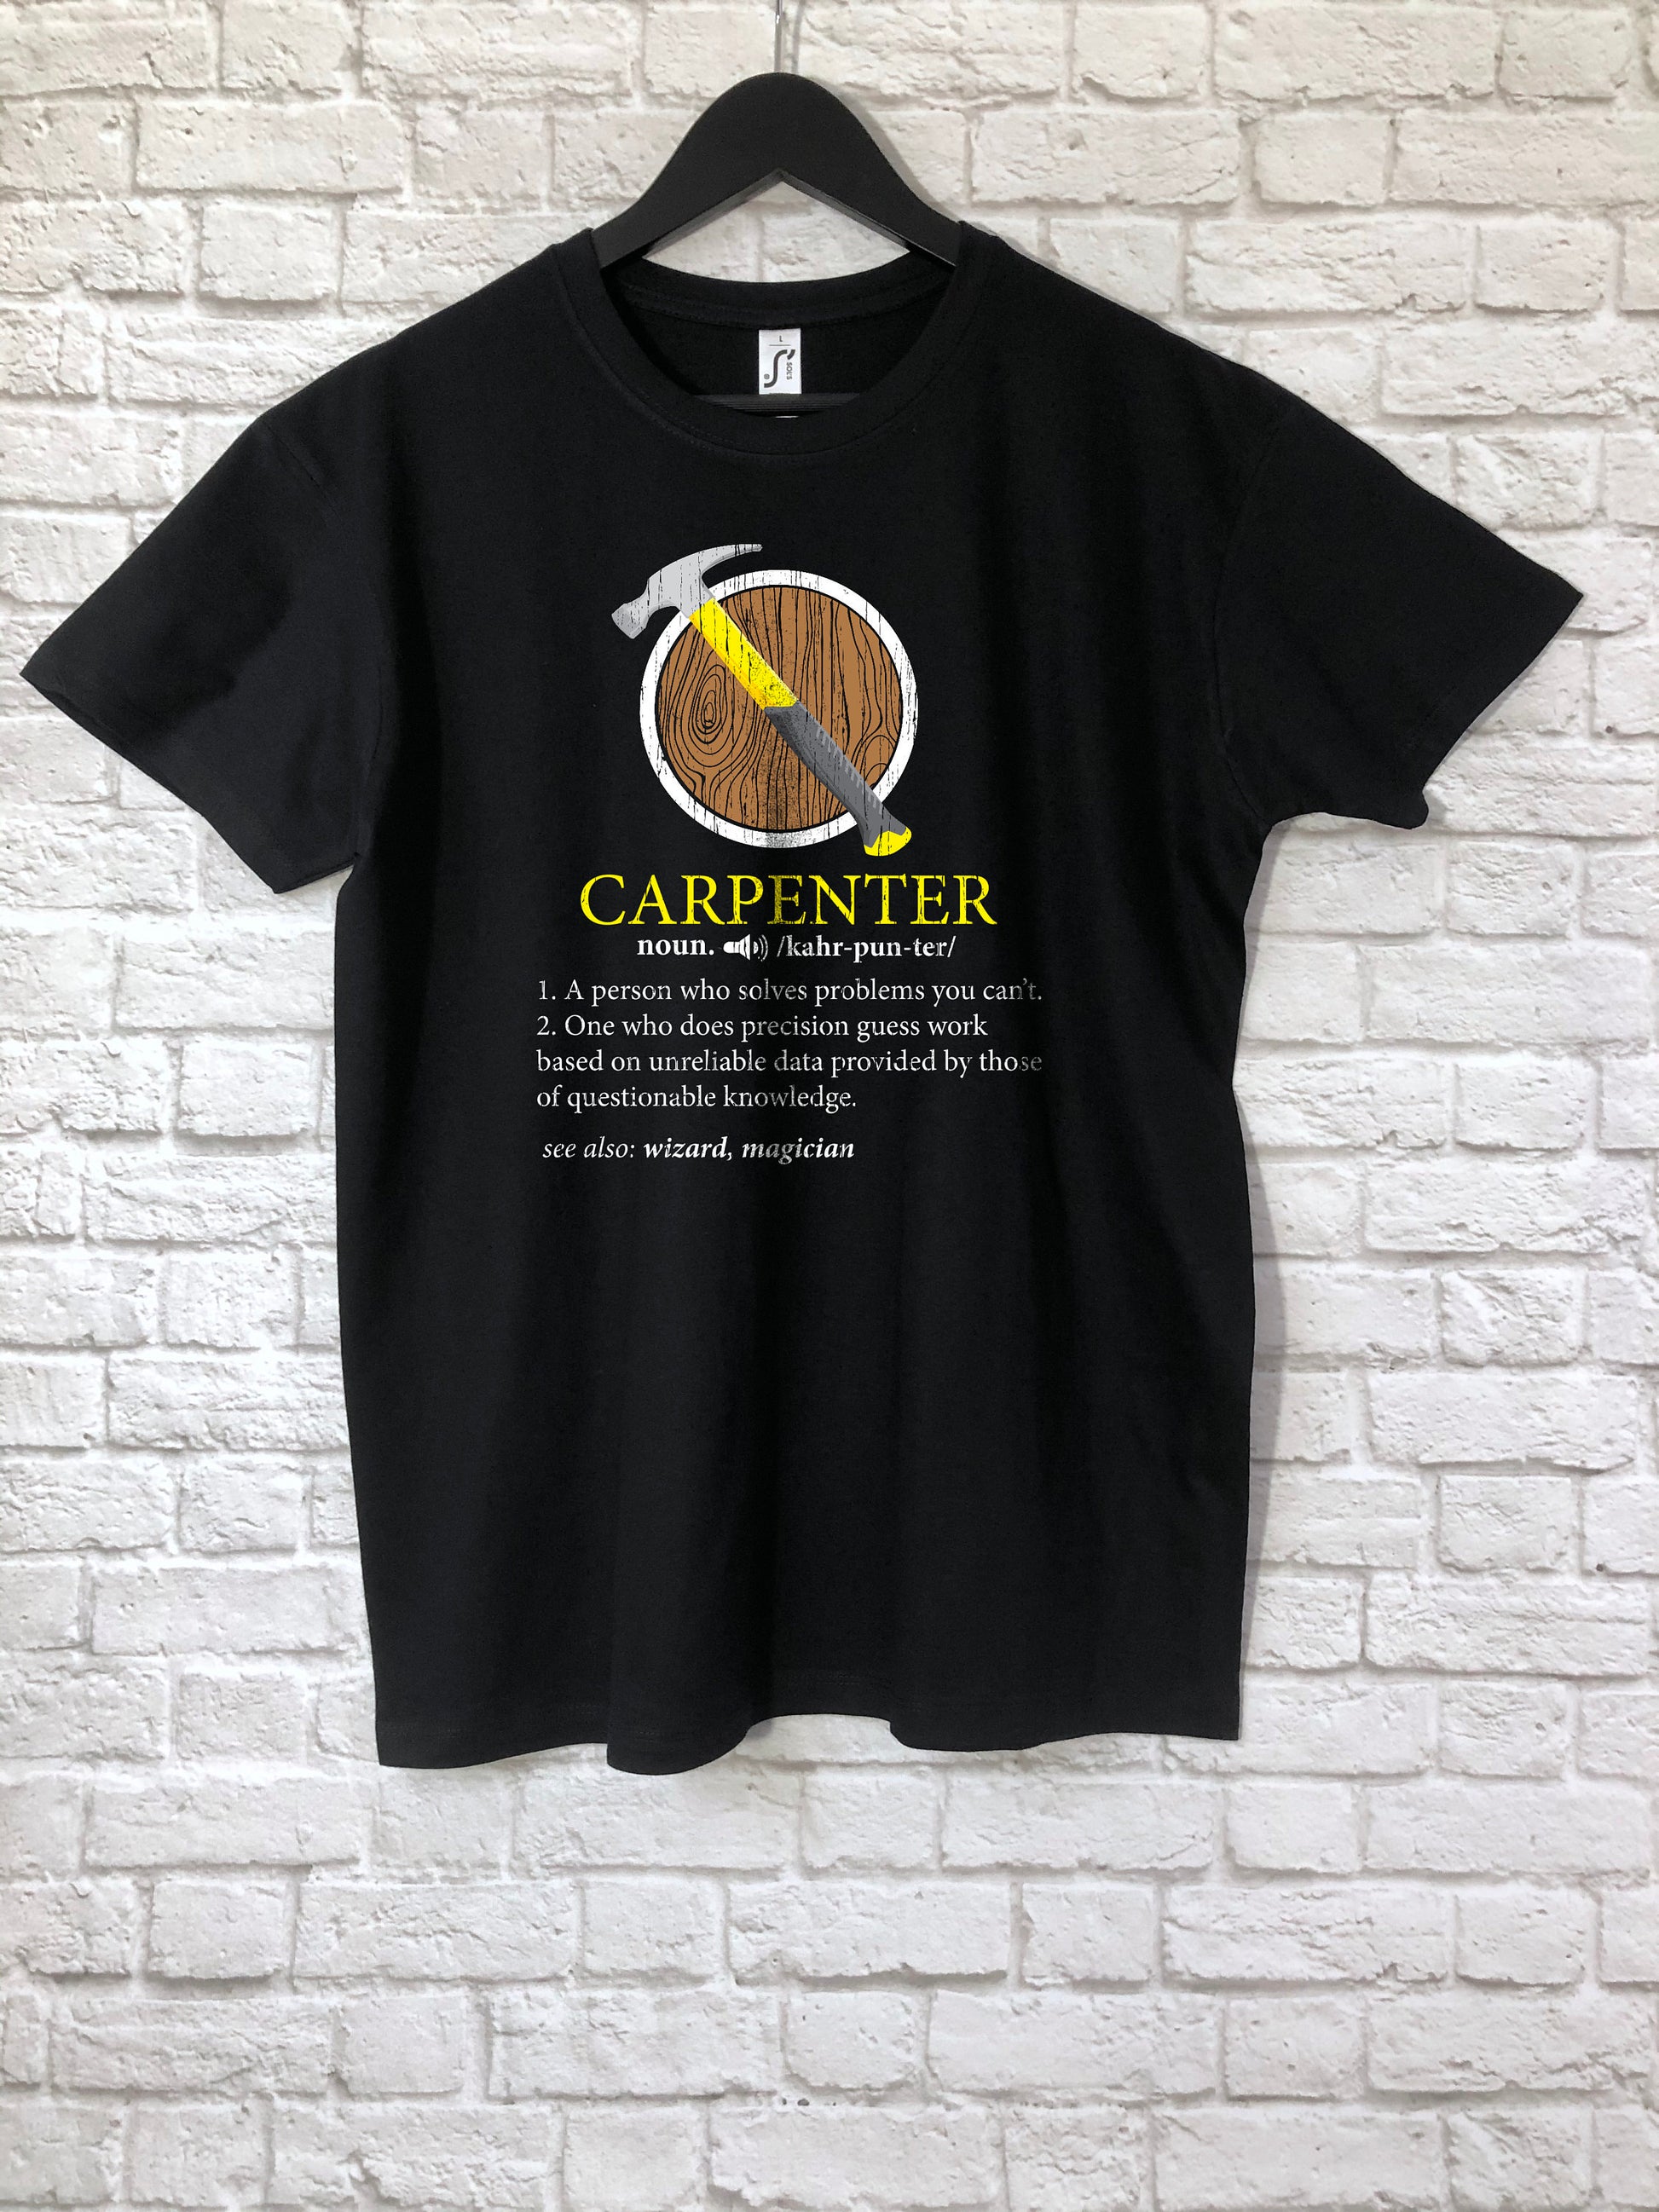 Funny Carpenter Definition T-Shirt, Woodwork Gift Idea, Humorous Woodworker Tee Shirt Top